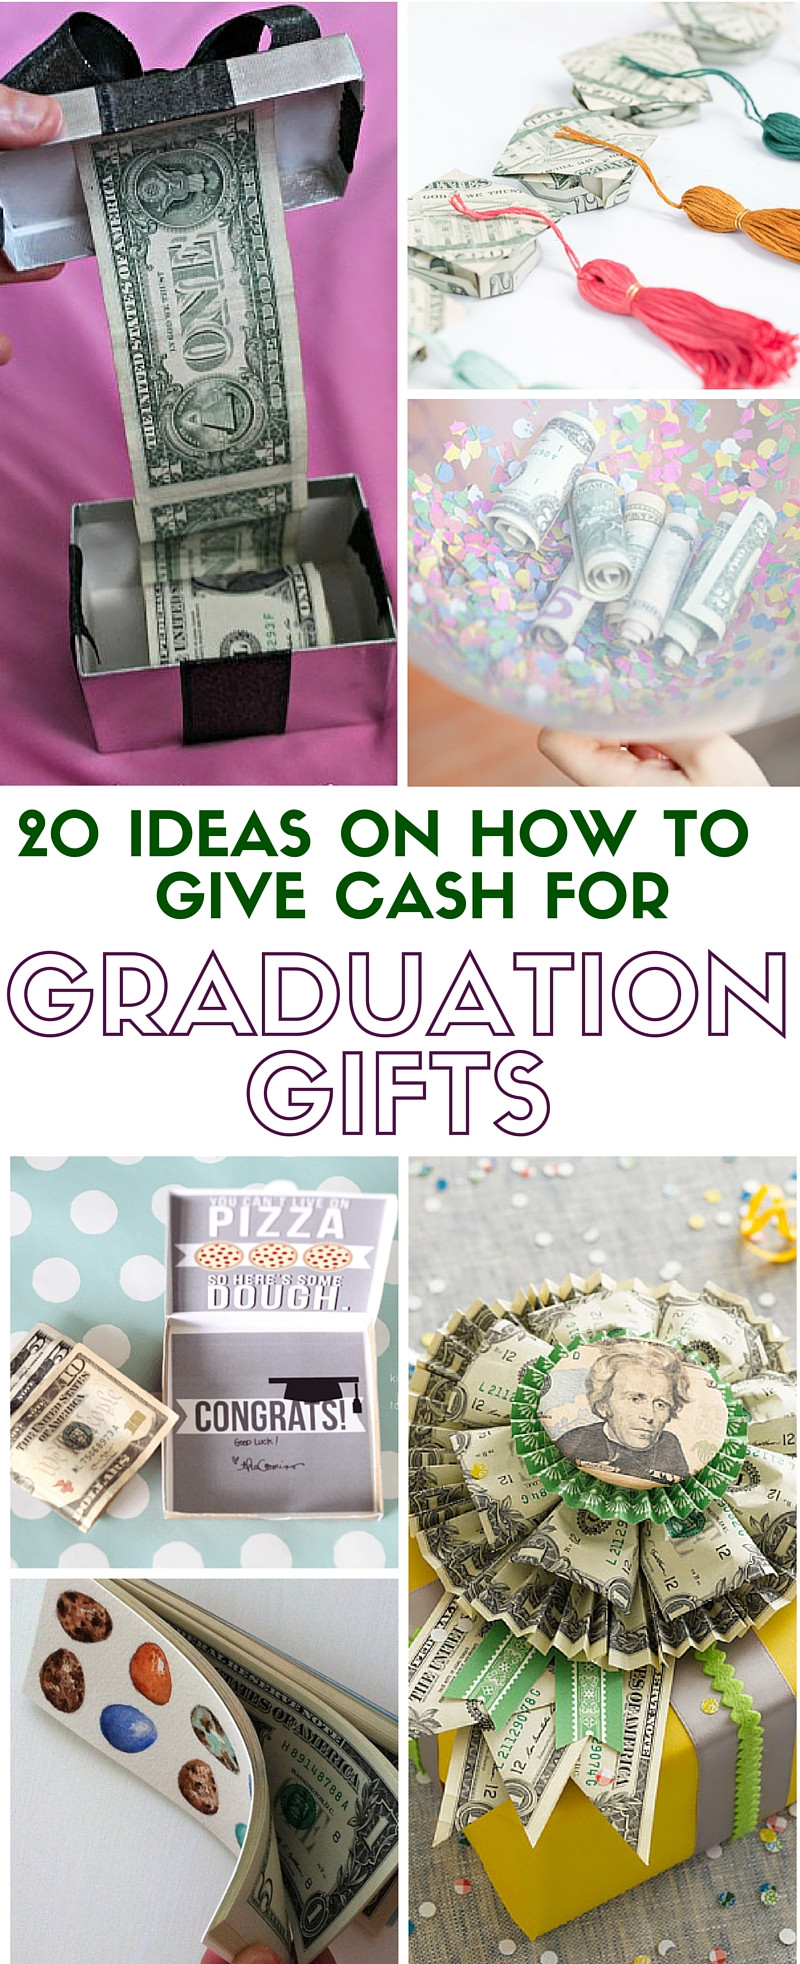 College Graduation Gift Ideas
 31 Back To School Teacher Gift Ideas The Crafty Blog Stalker